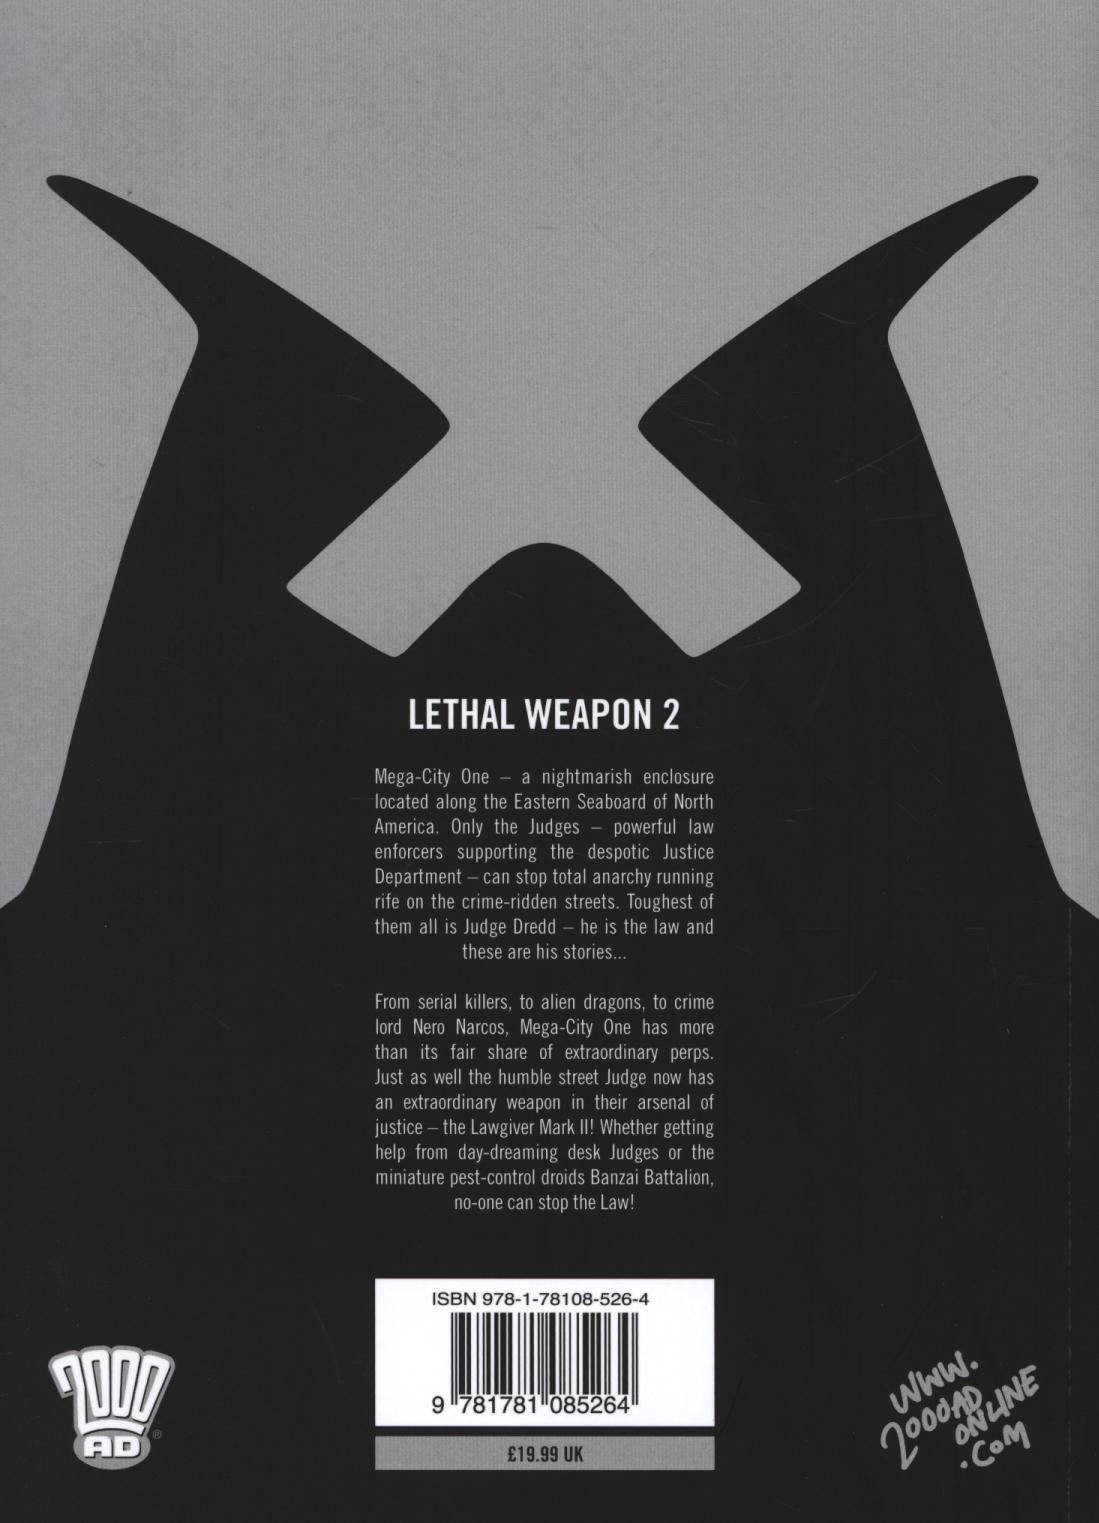 Judge Dredd: Complete Case Files 29